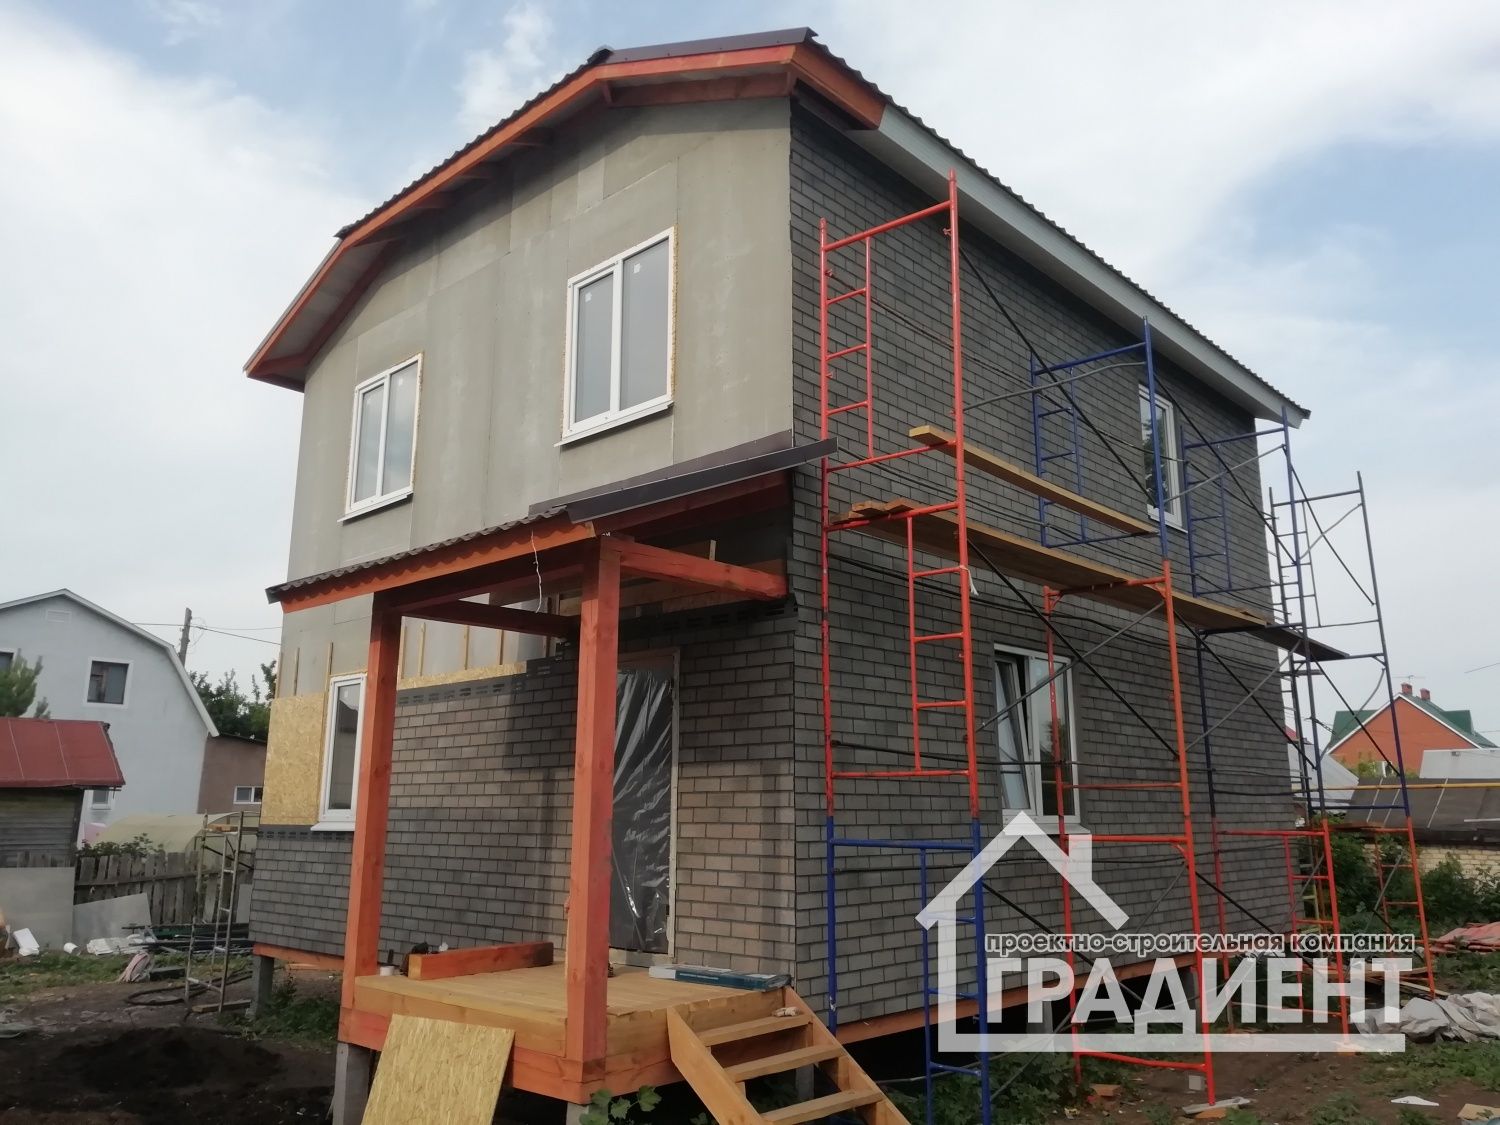 Завершено строительство дома в п.Зубчаниновка. Площадь дома 120 кв.м. Идет отделка фасада битумной имитацией кирпича.